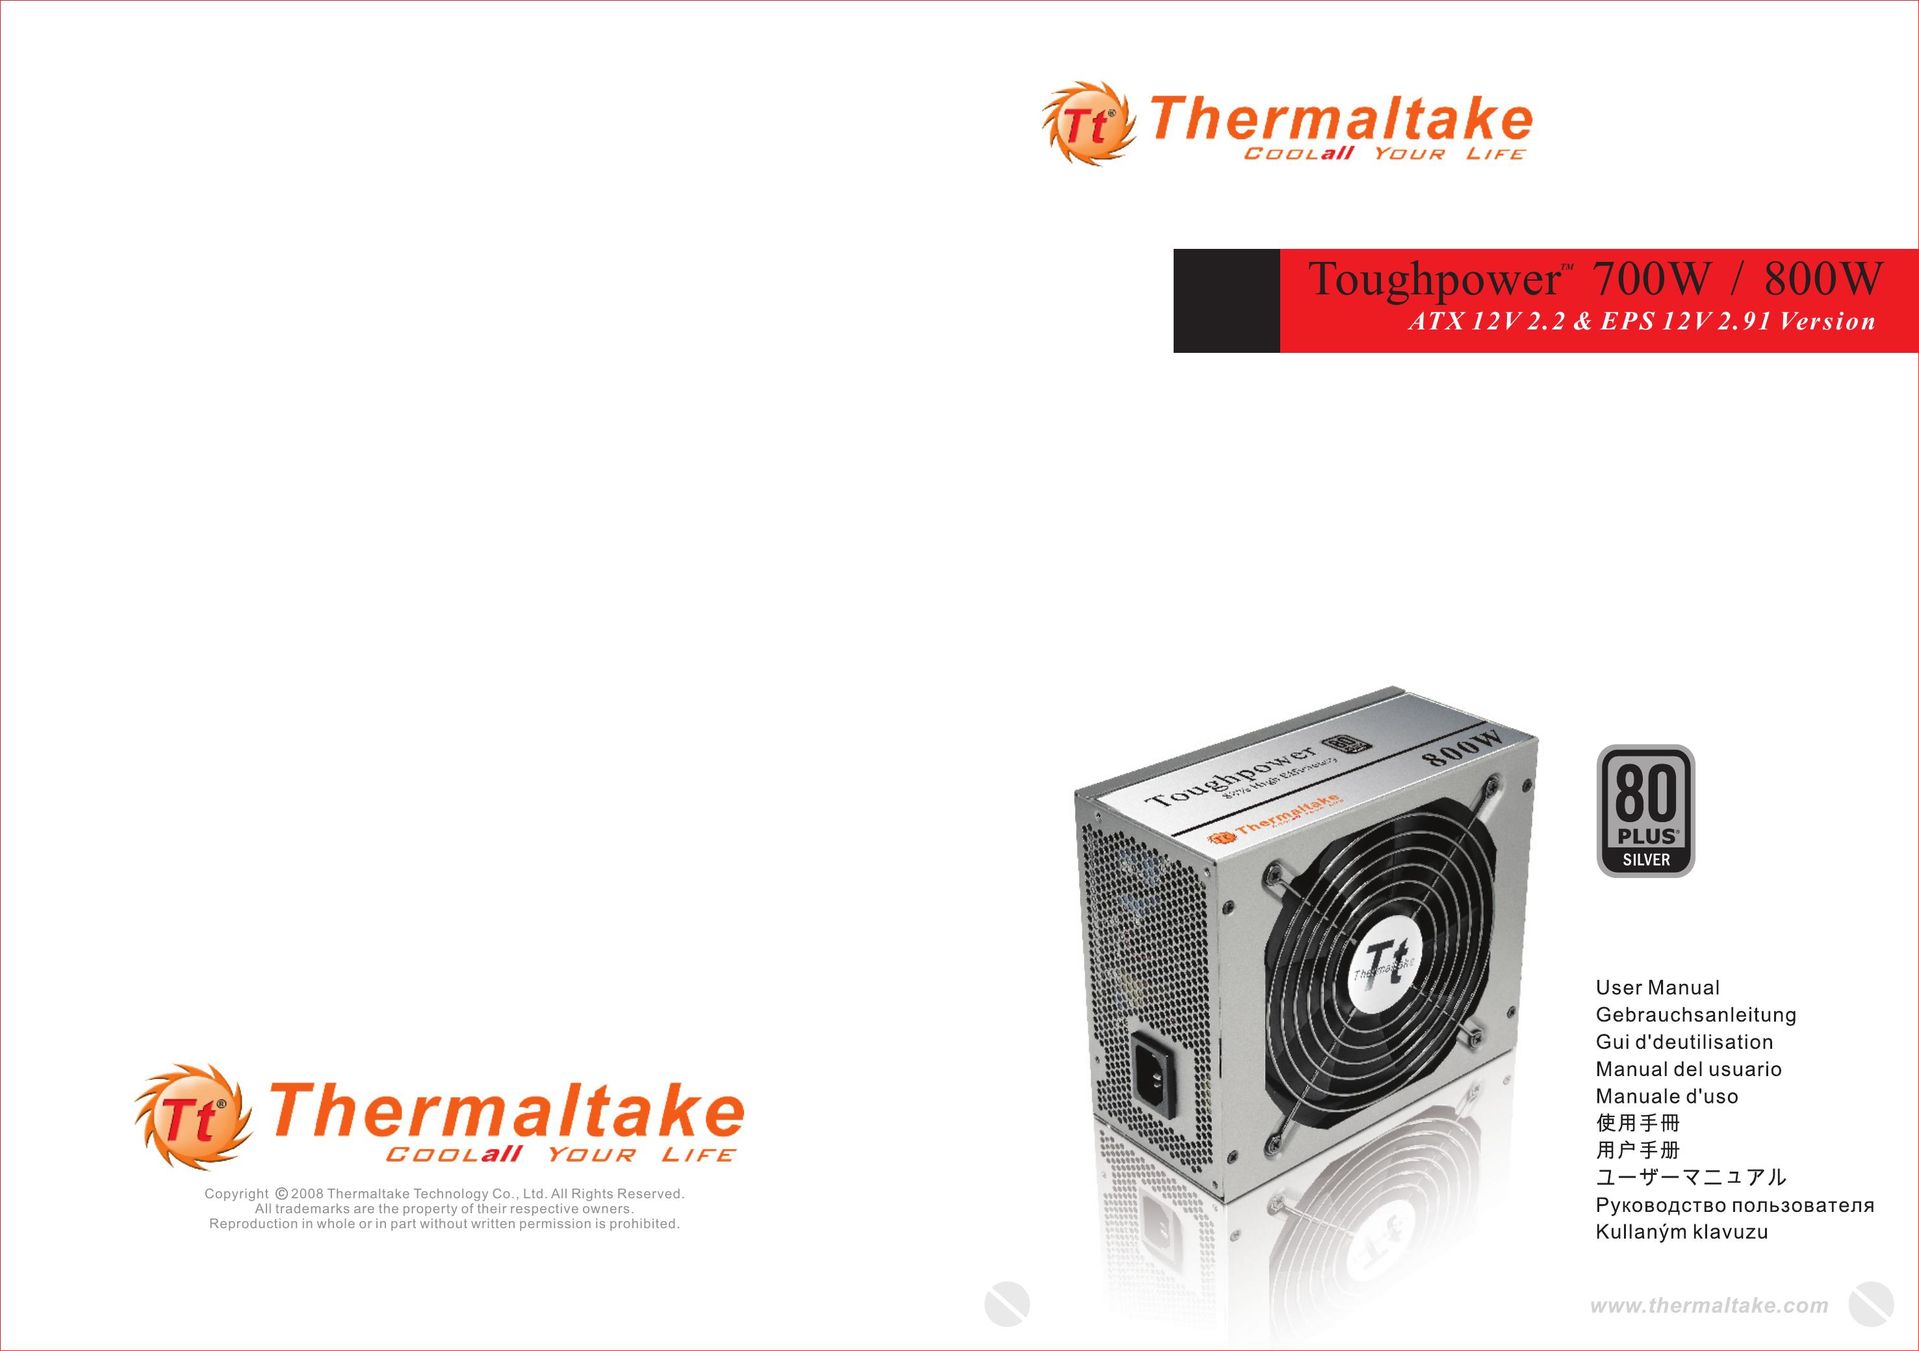 Thermaltake W0295 Power Supply User Manual